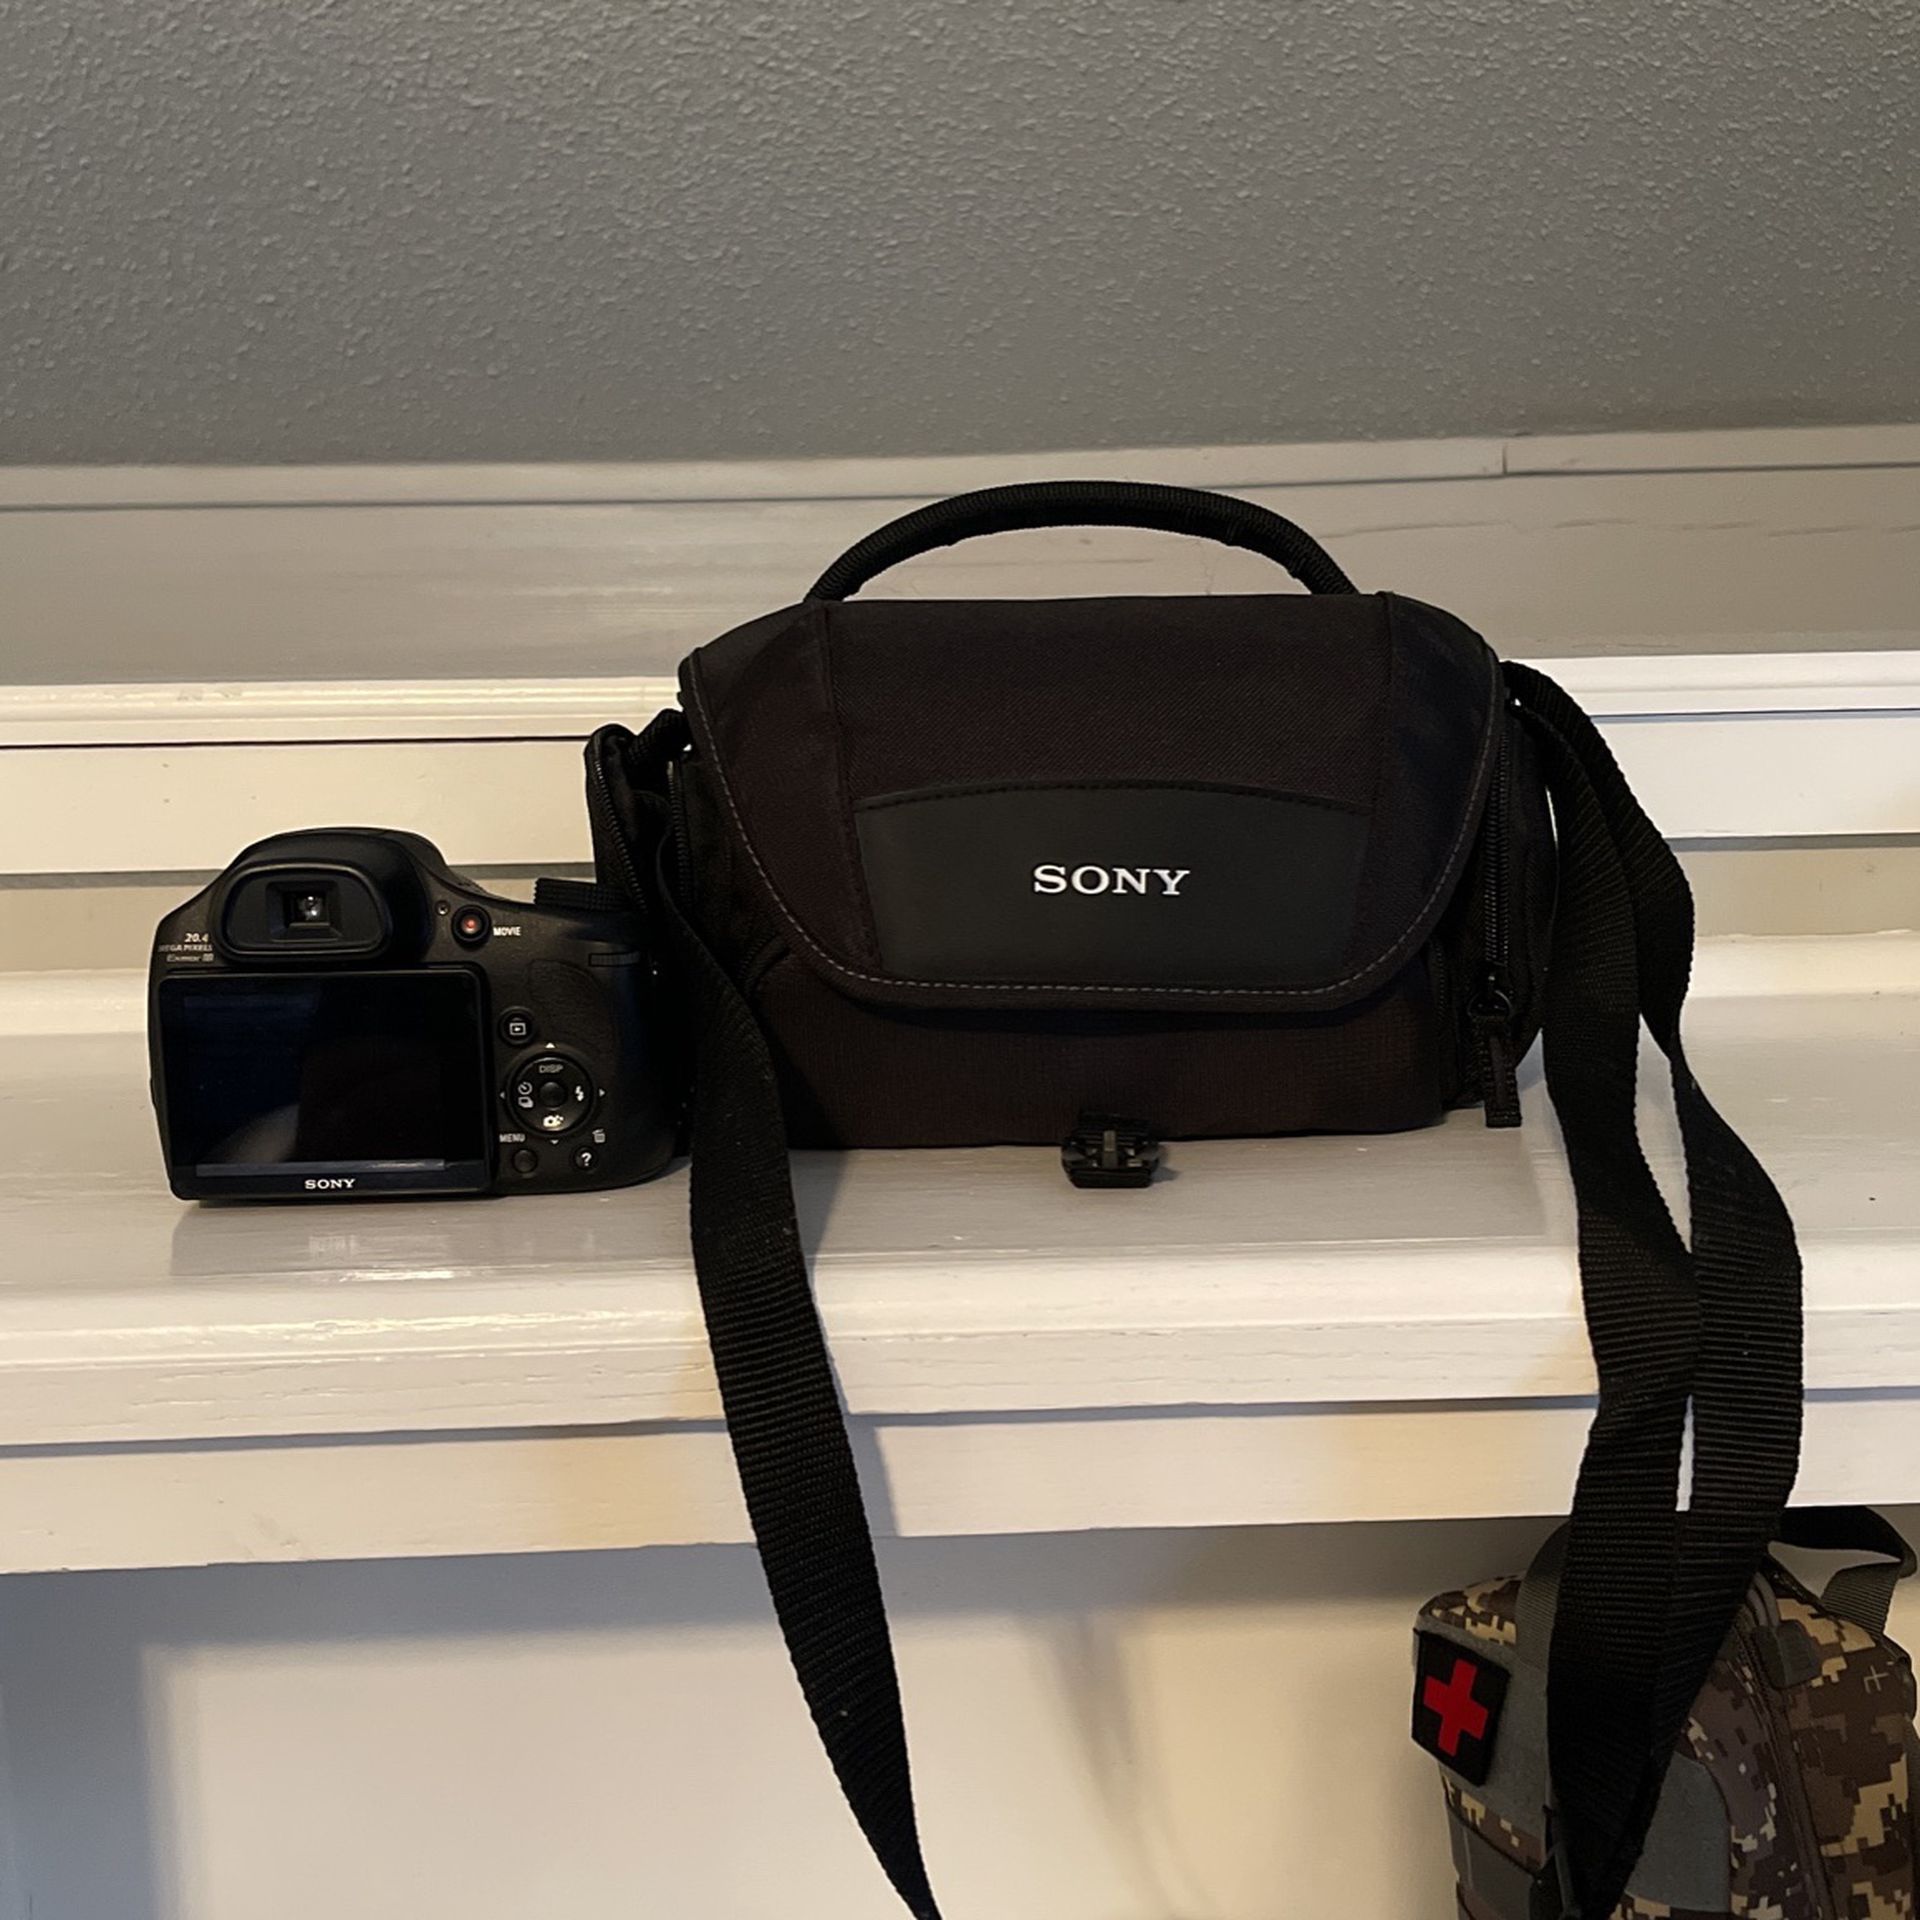 Sony Cybershot HX300 Camera with 50x Optical Zoom